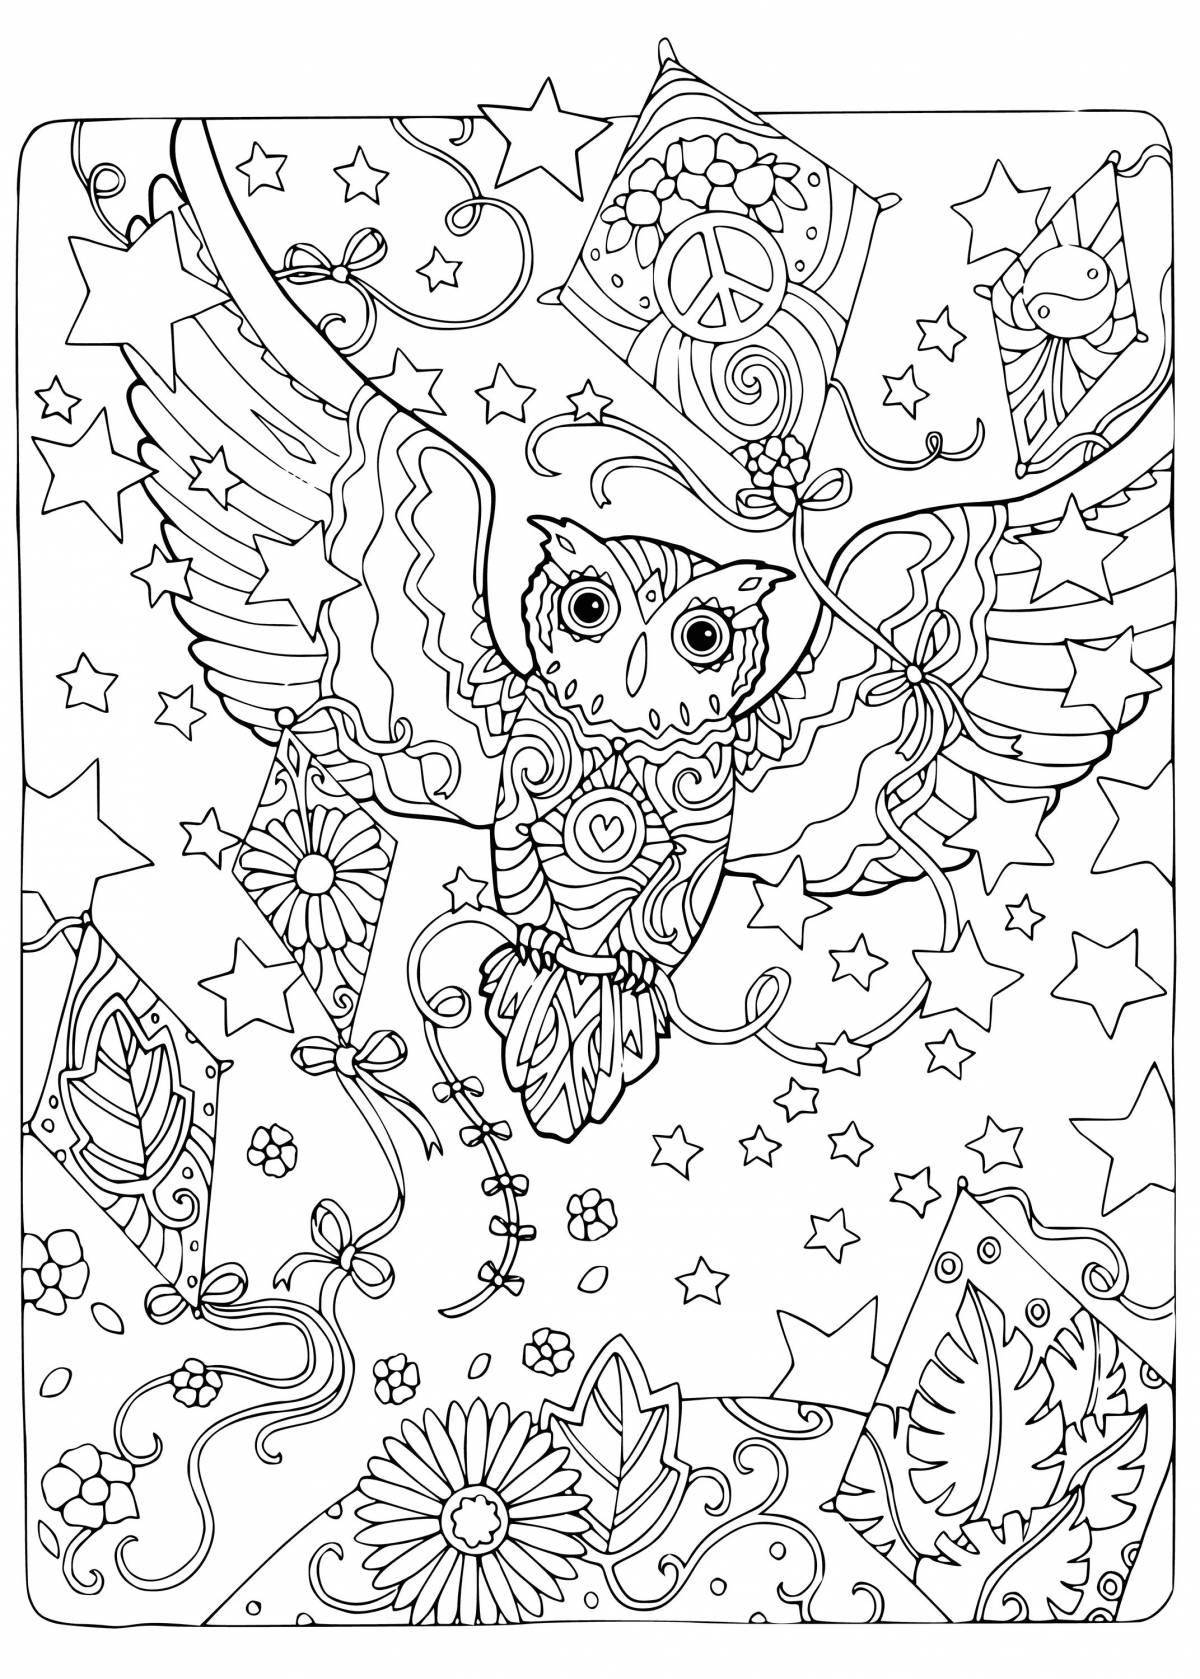 Coloring book shining anti-stress owls